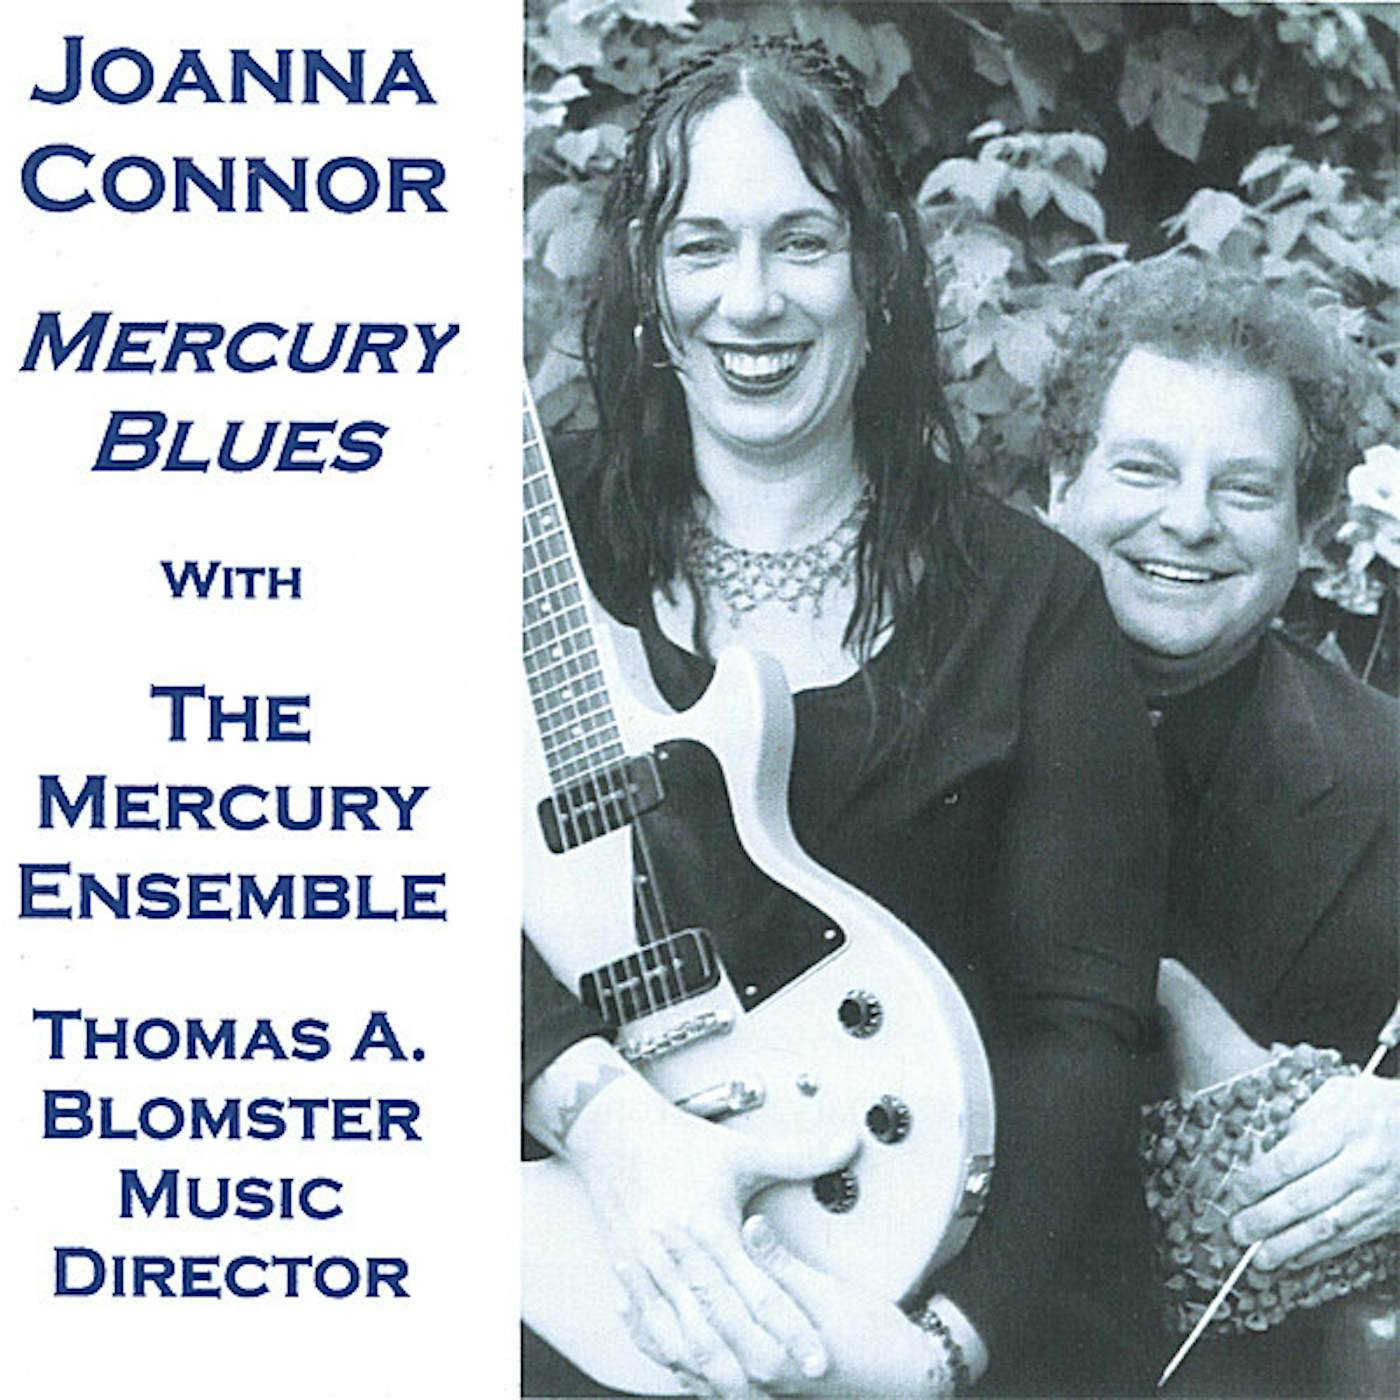 Joanna Connor MERCURY BLUES CD